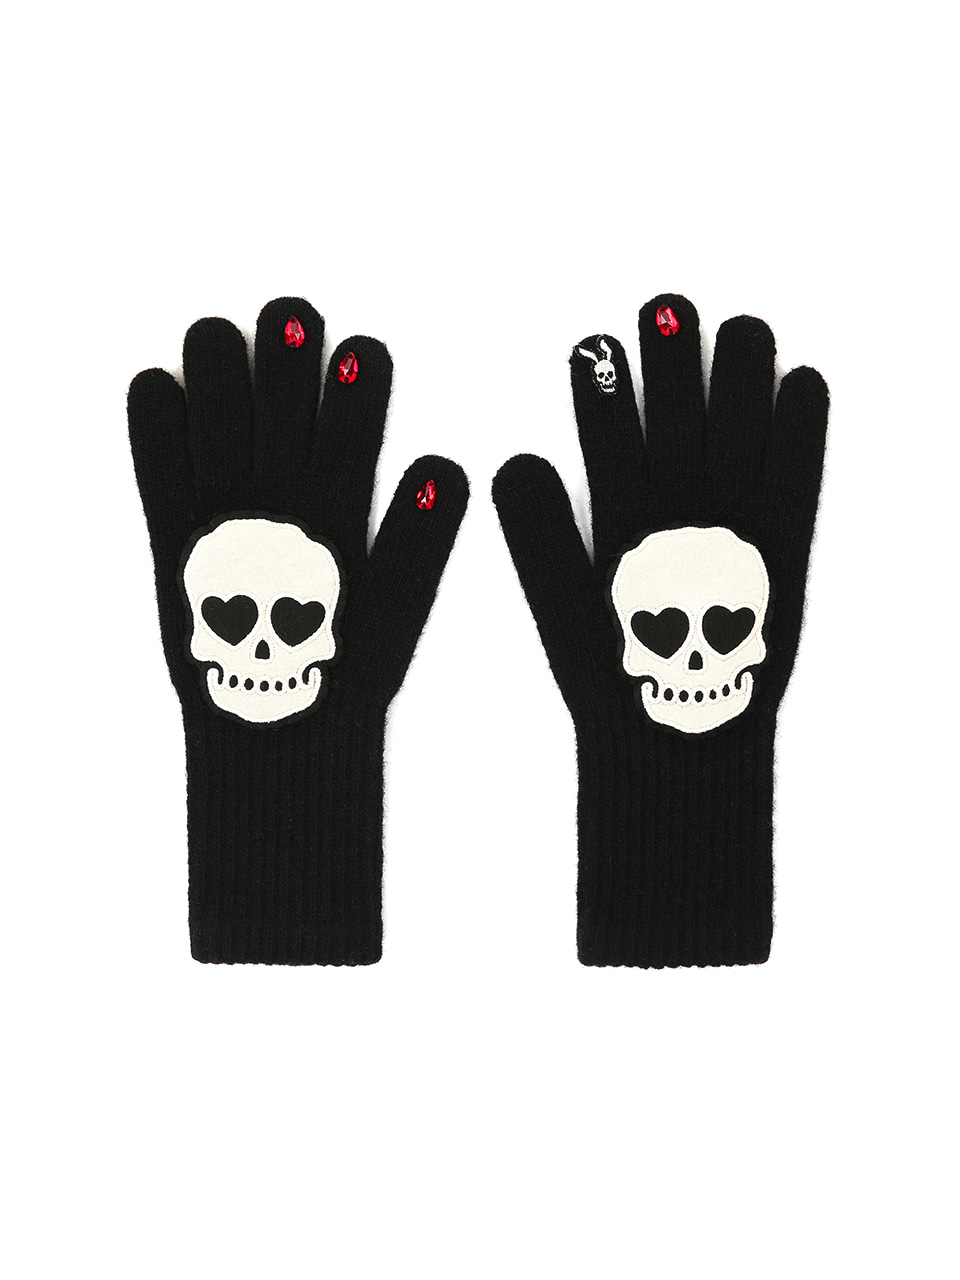 0 5 skull in love wool gloves - BLACK